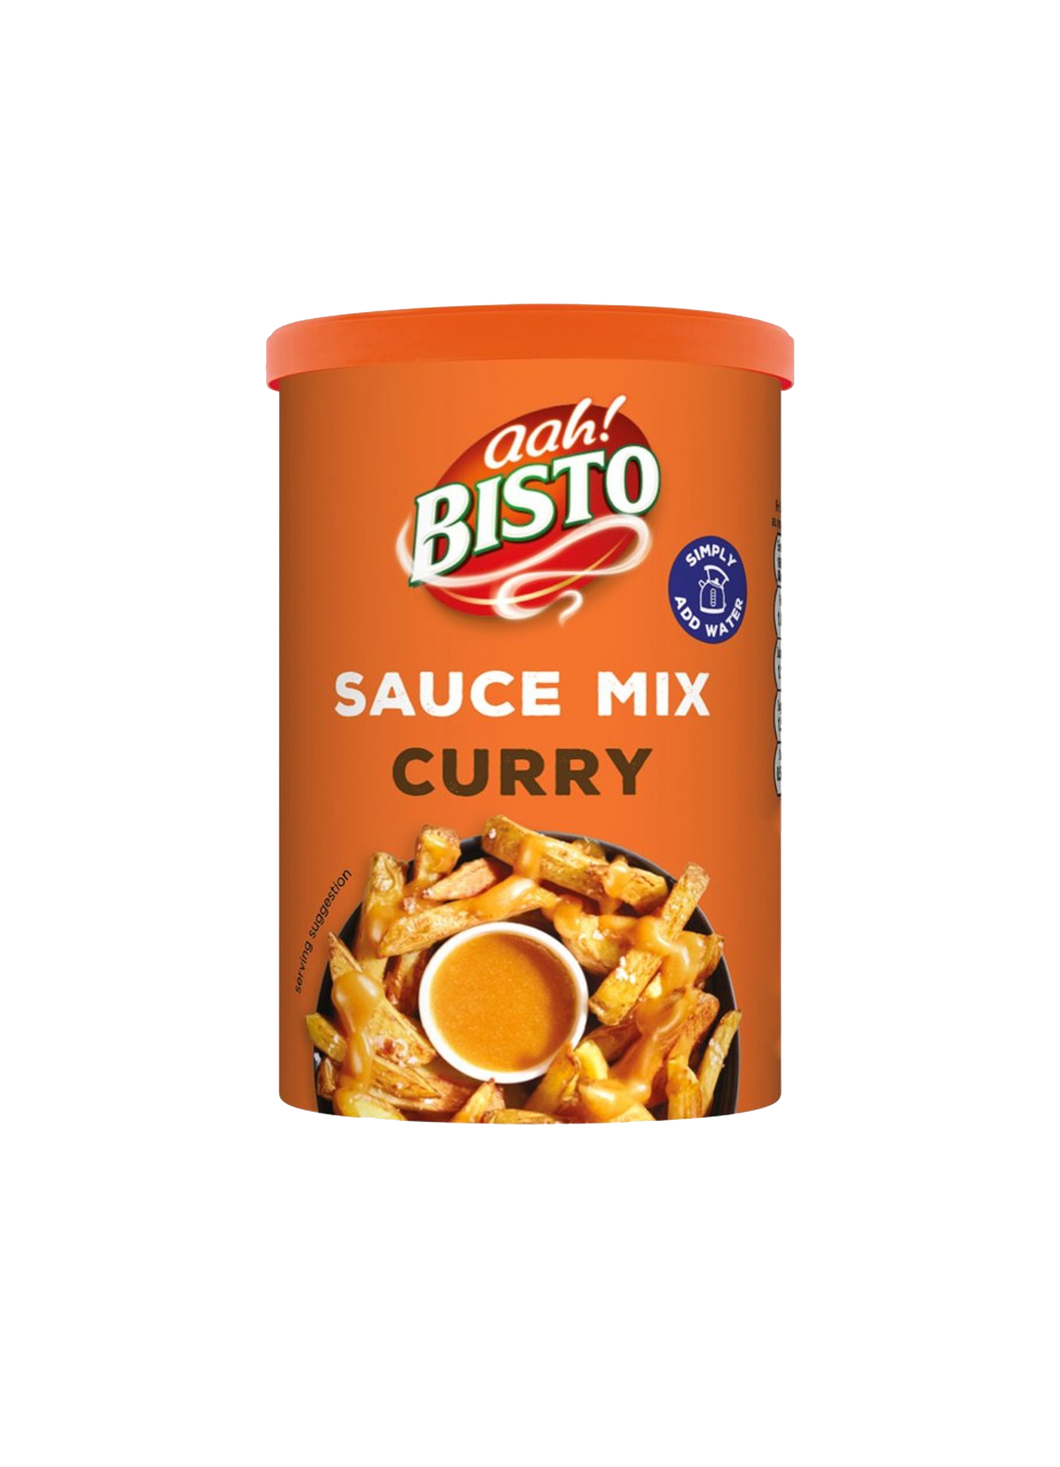 BISTO Sauce Mix Curry 185g